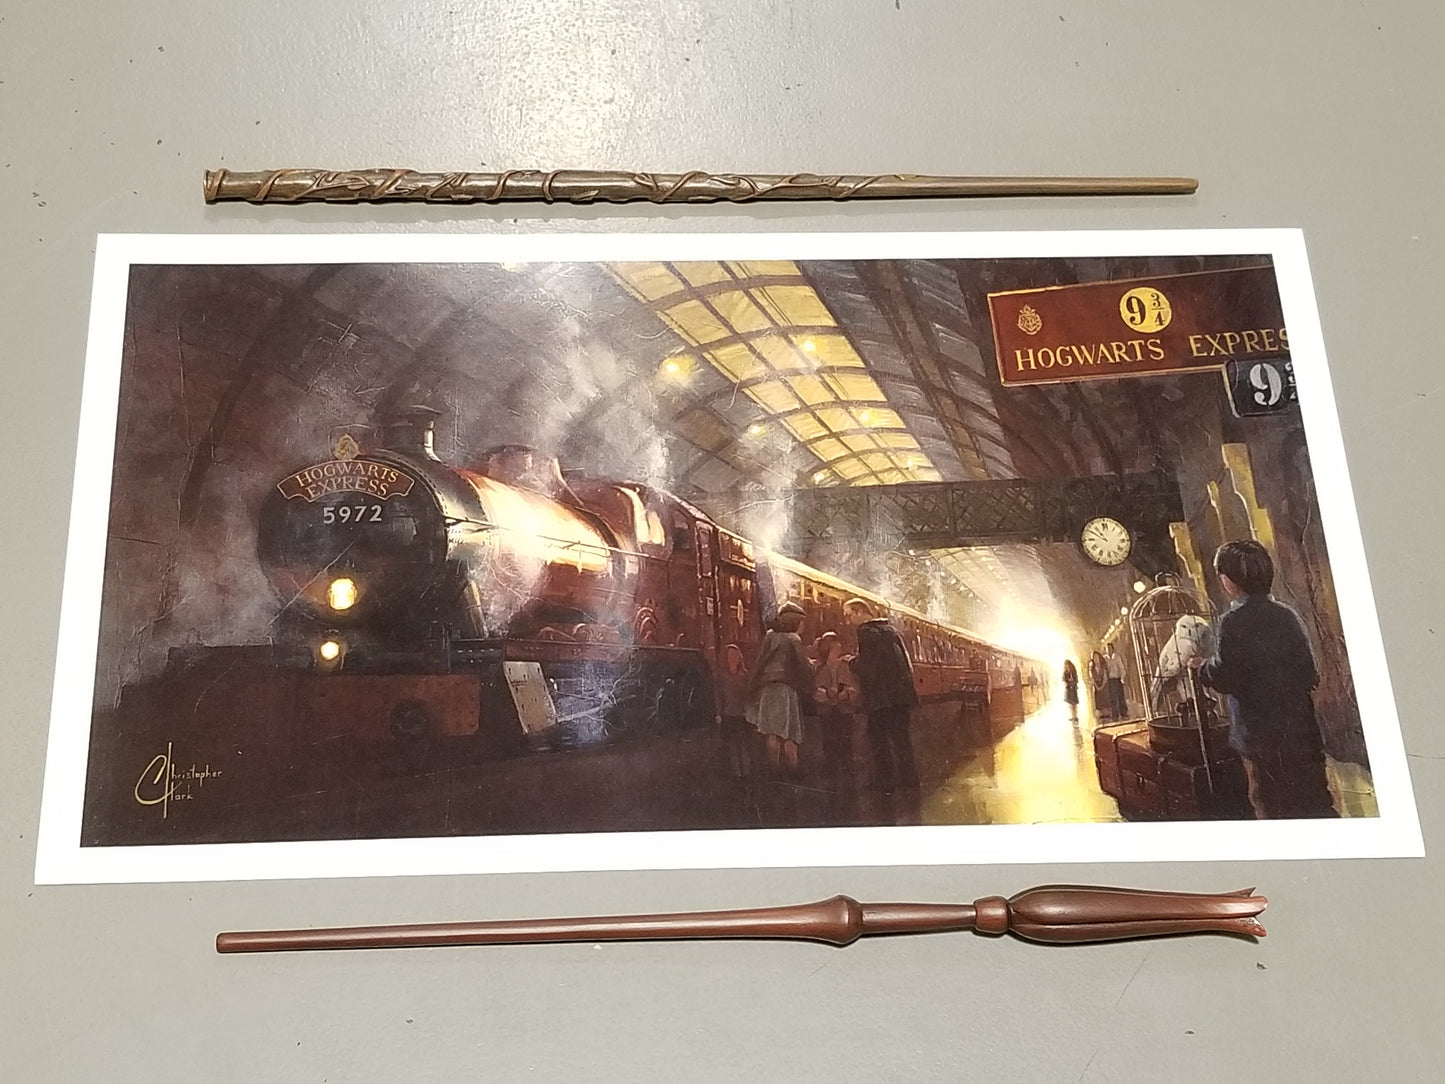 Load image into Gallery viewer, Platform 9 and 3/4 (Harry Potter) Hogwarts Express Premium Art Print
